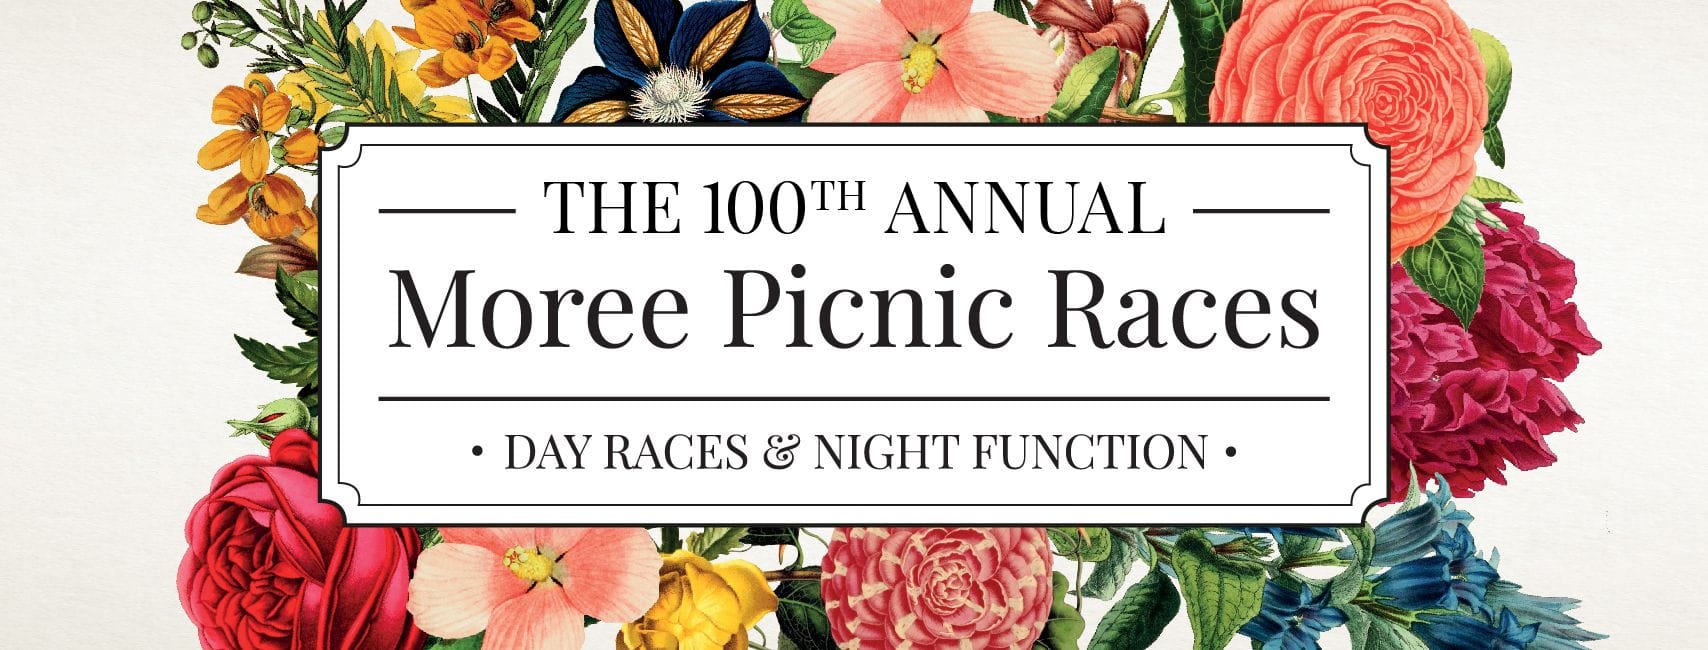 Moree Picnic Race Club - Black Tie Evening